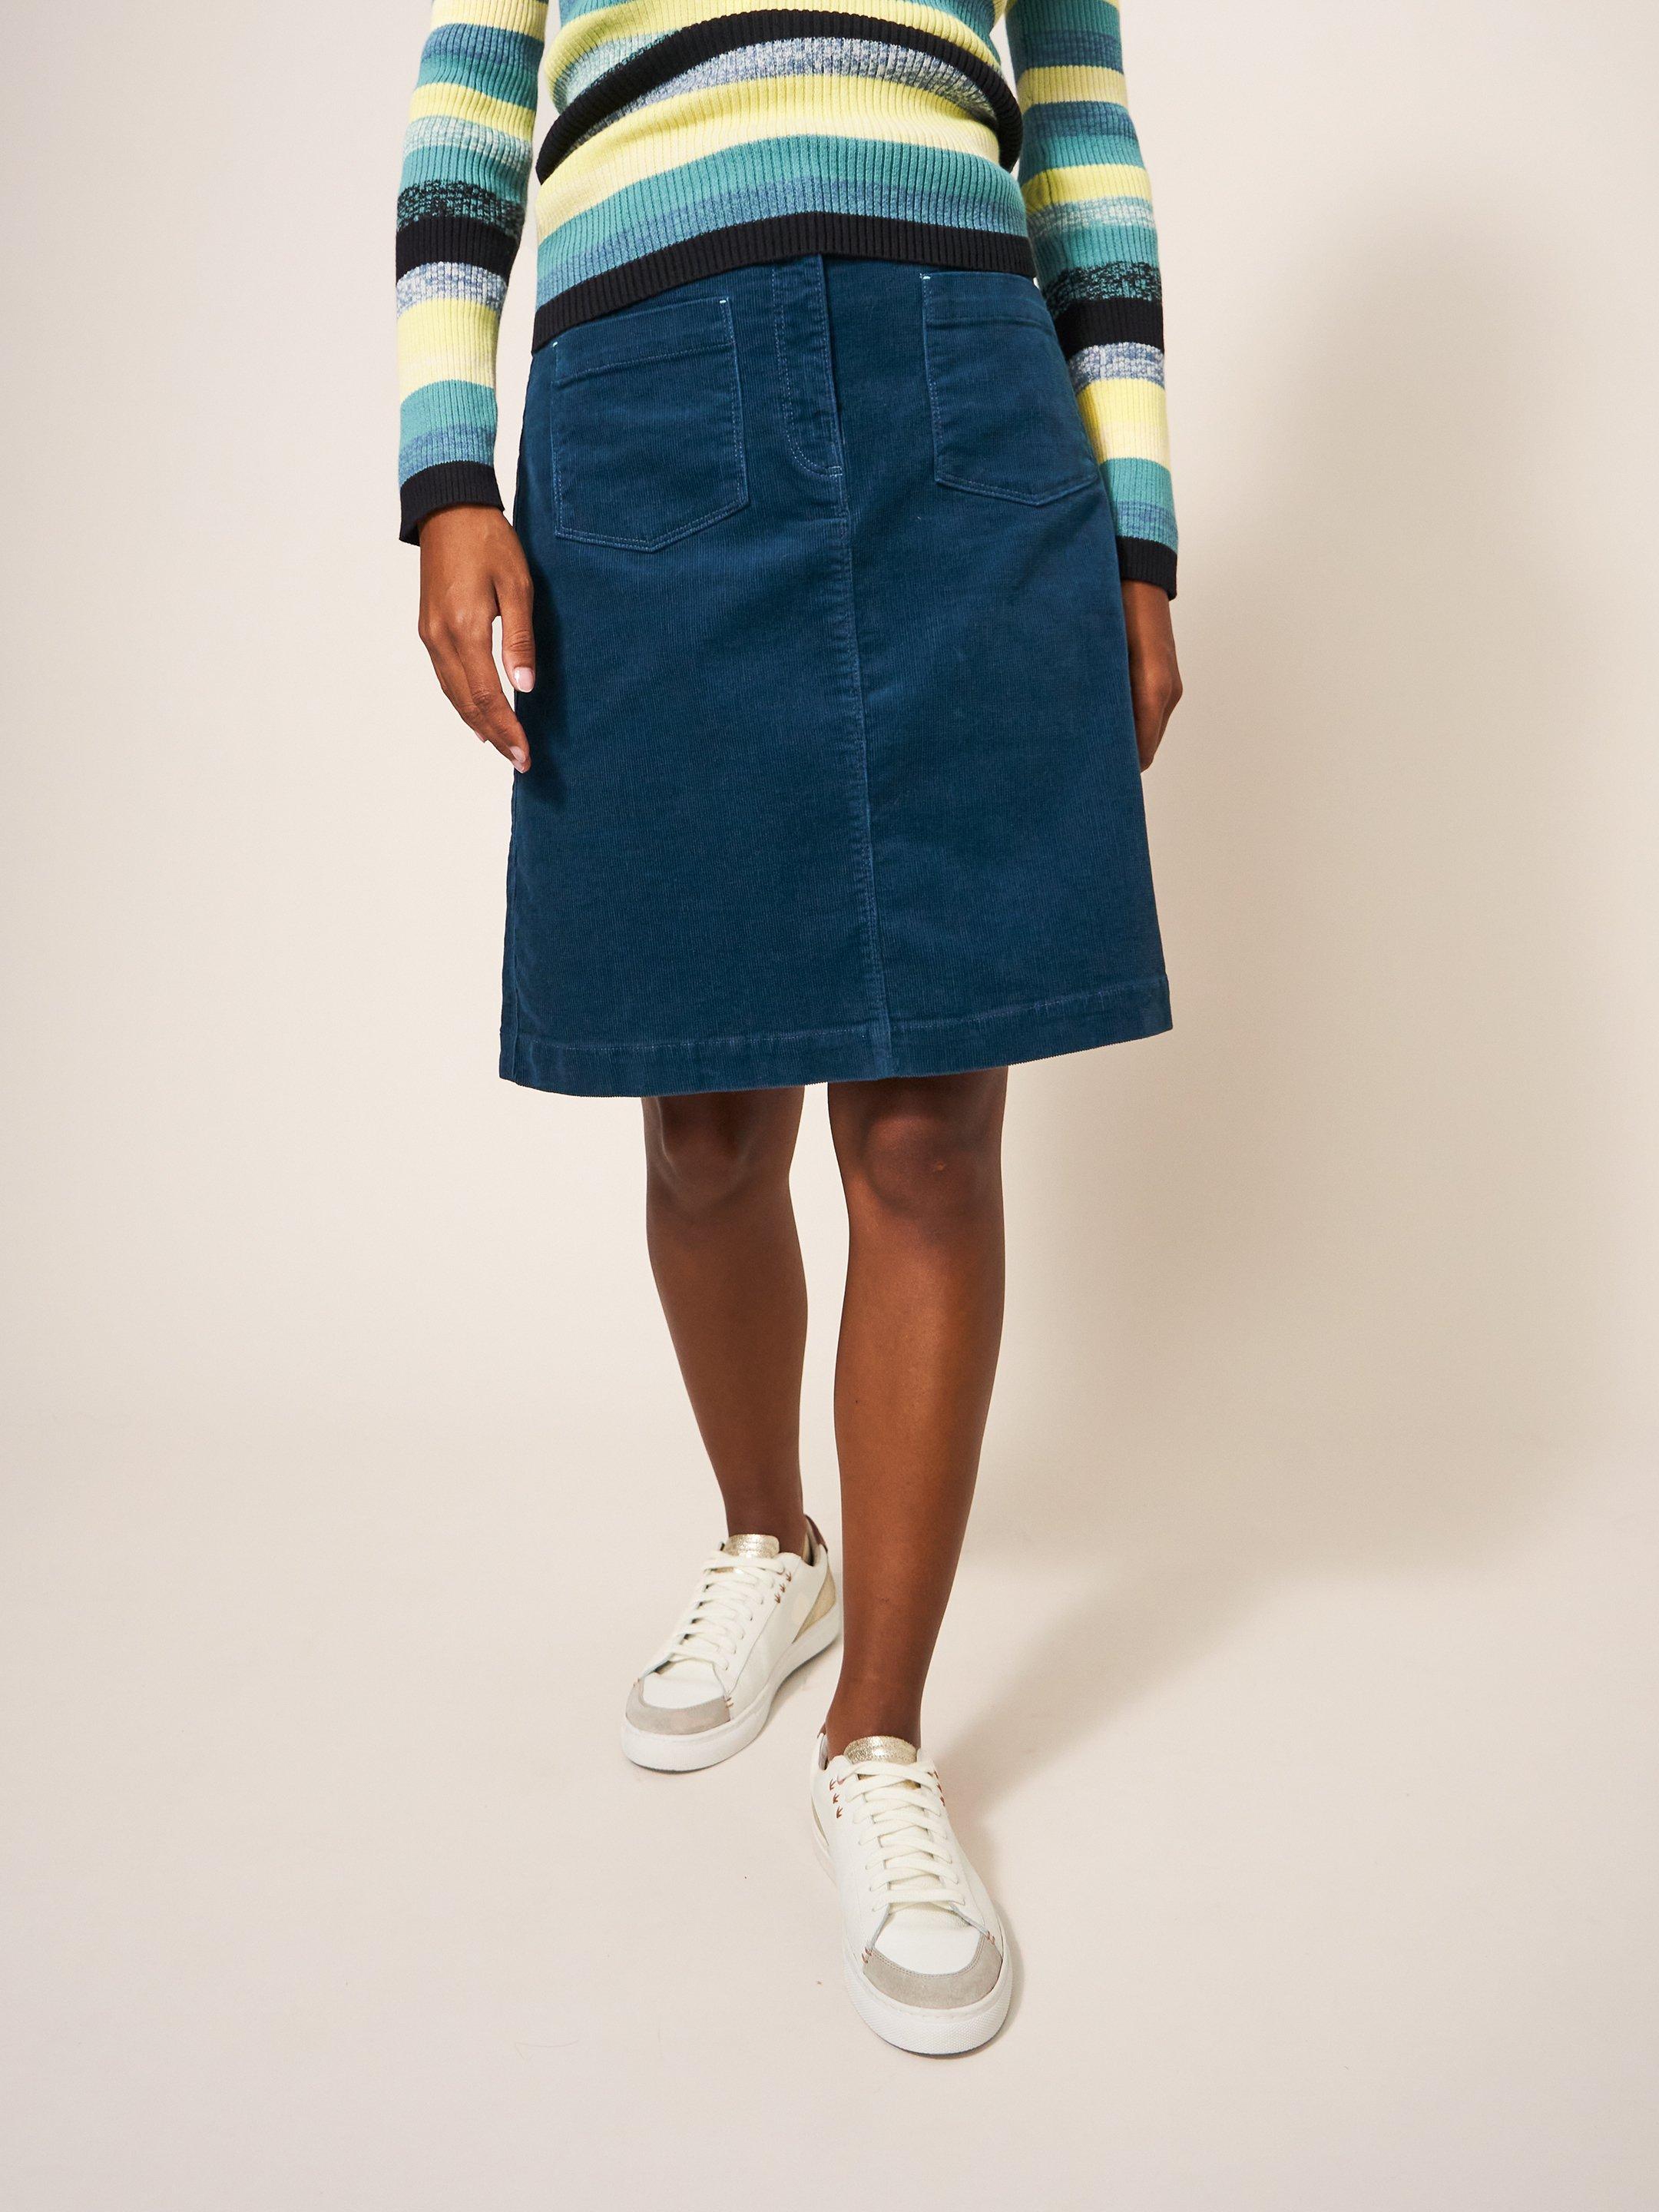 Melody Organic Cord Skirt in DK TEAL - MODEL DETAIL